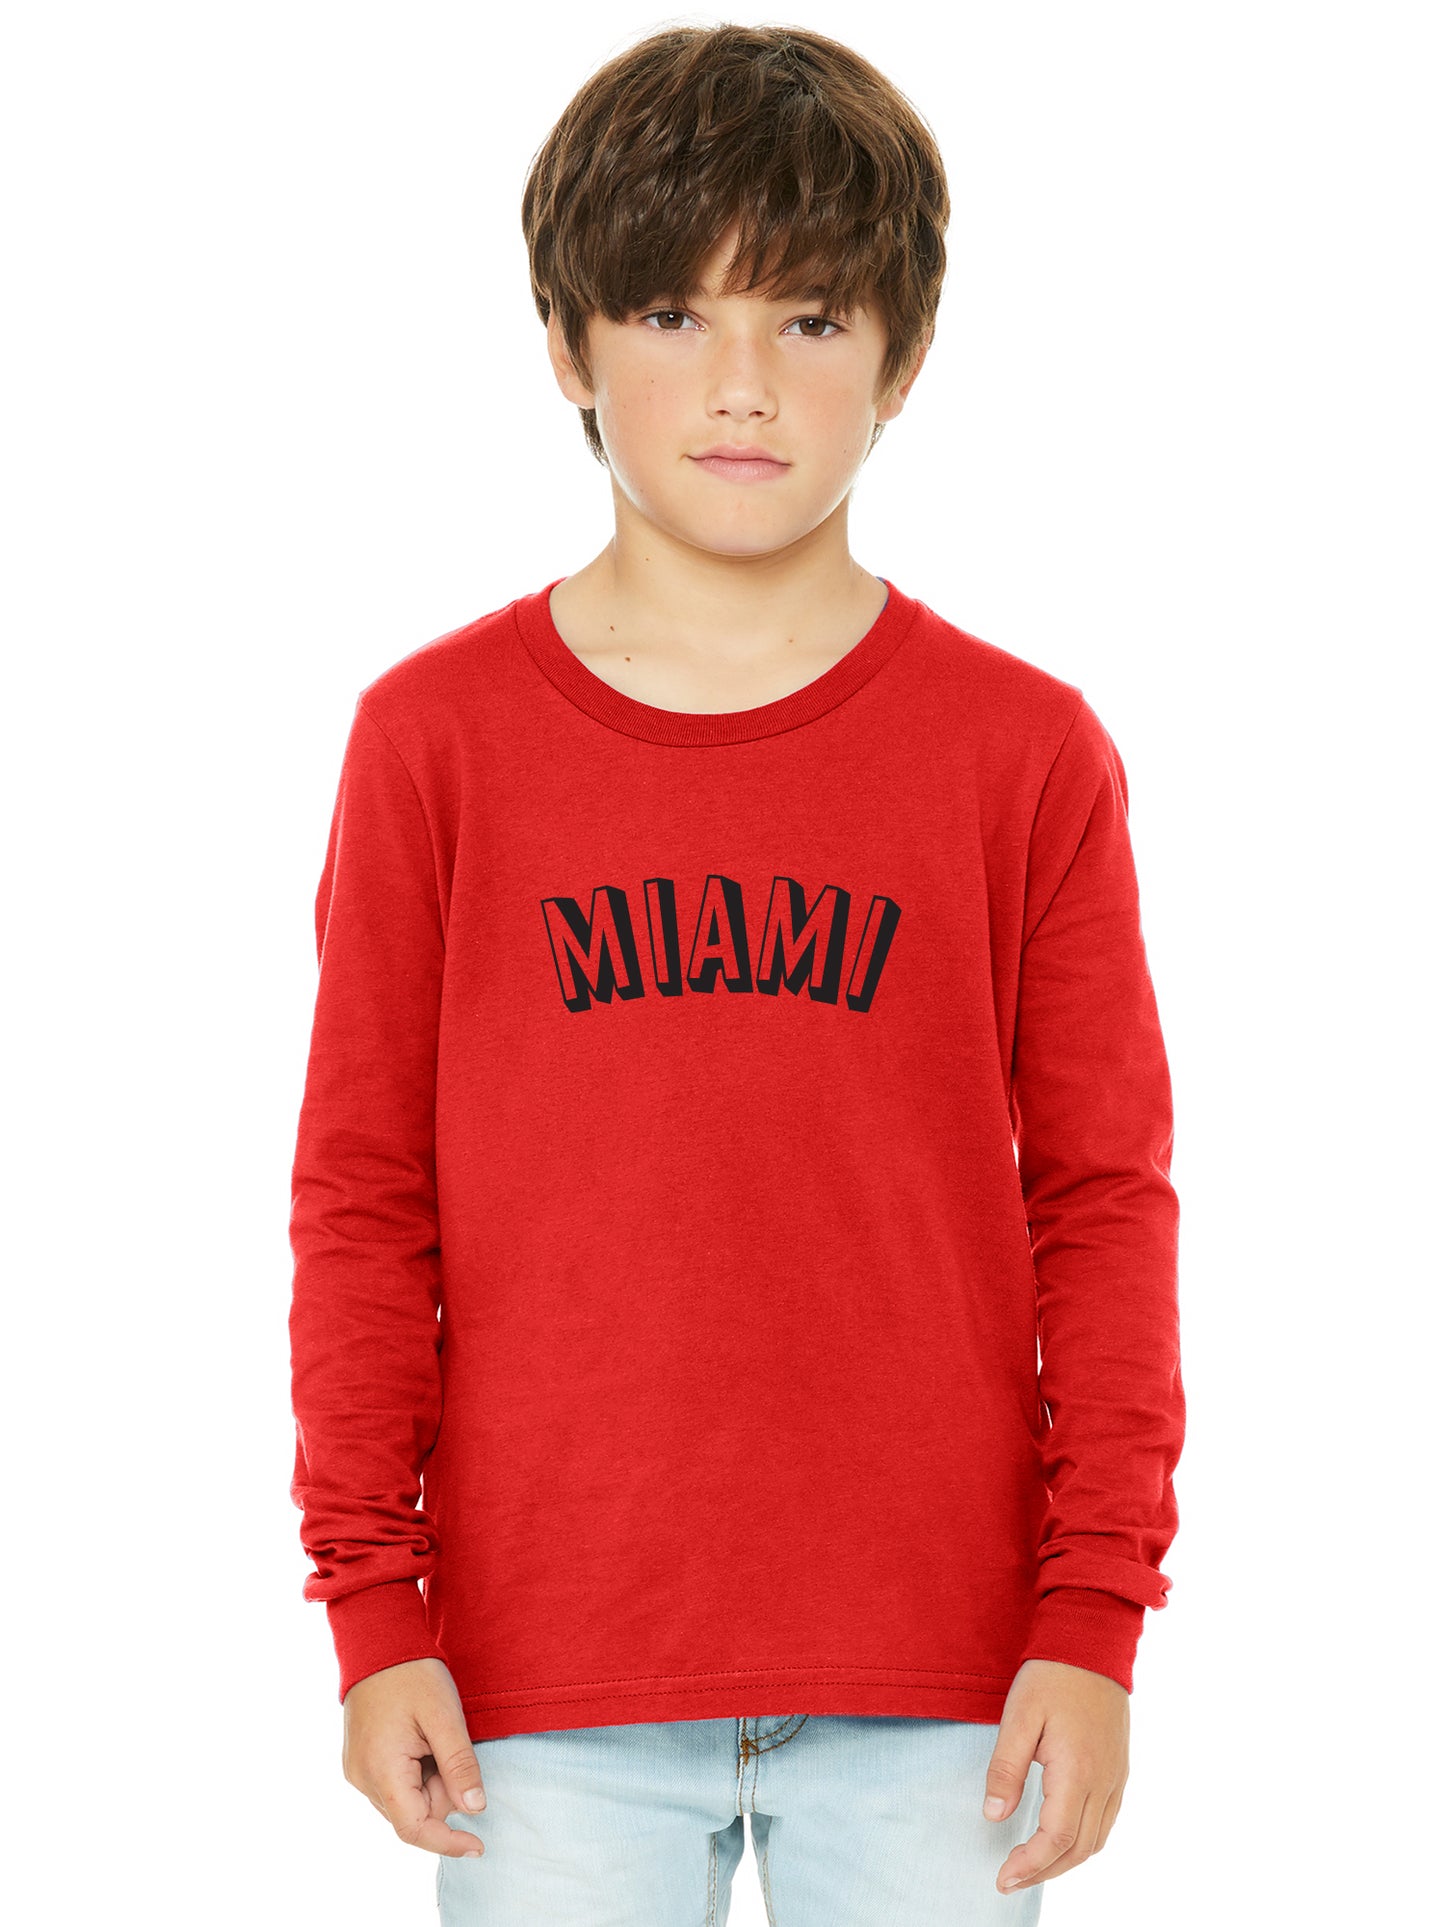 Daxton Youth Long Sleeve Miami Basic Tshirt